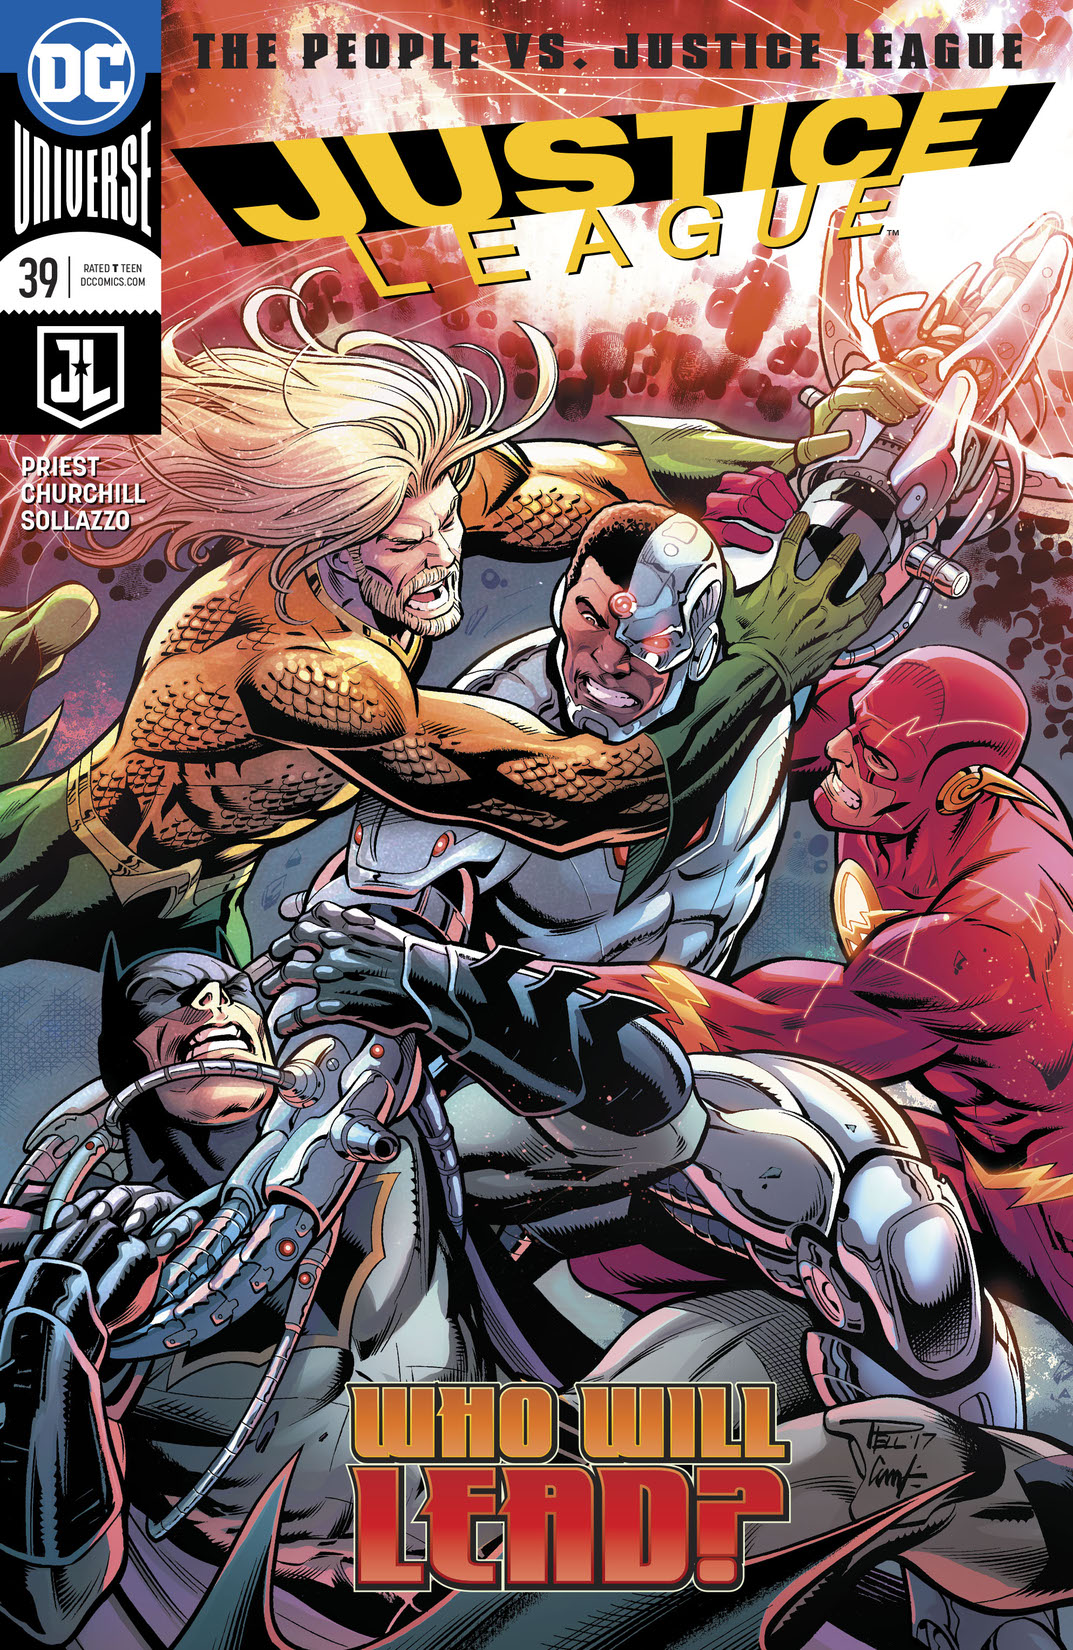 Justice League (2016-) #39 preview images